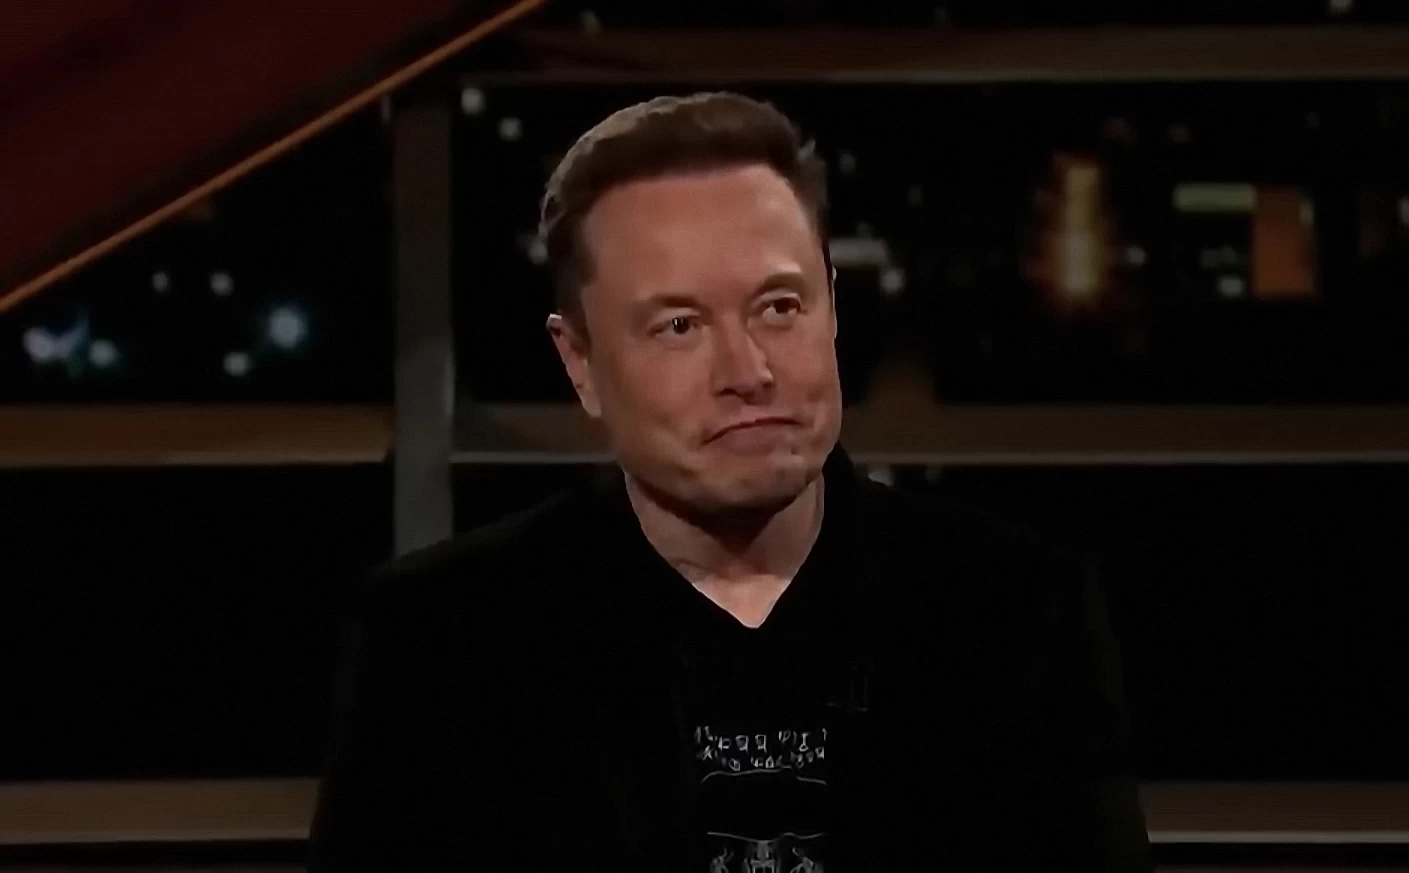 Elon Musk brain implant startup